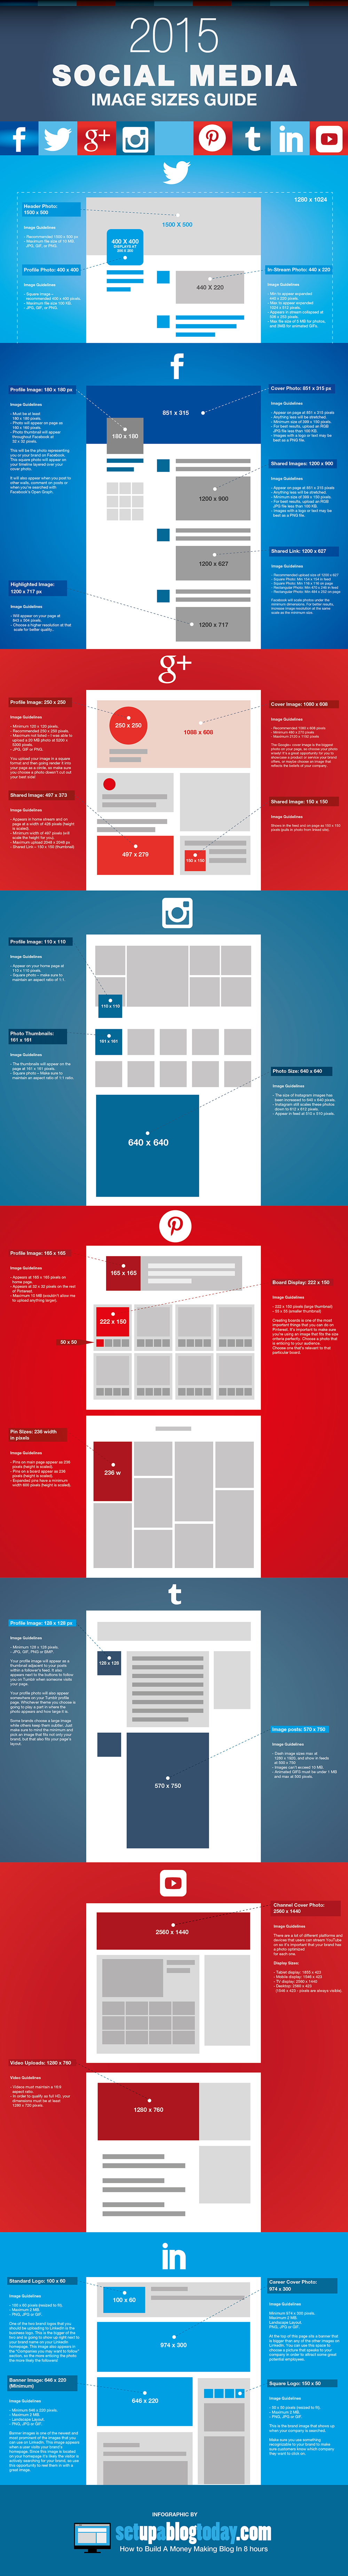 2015-social-media-image-sizes-infographic